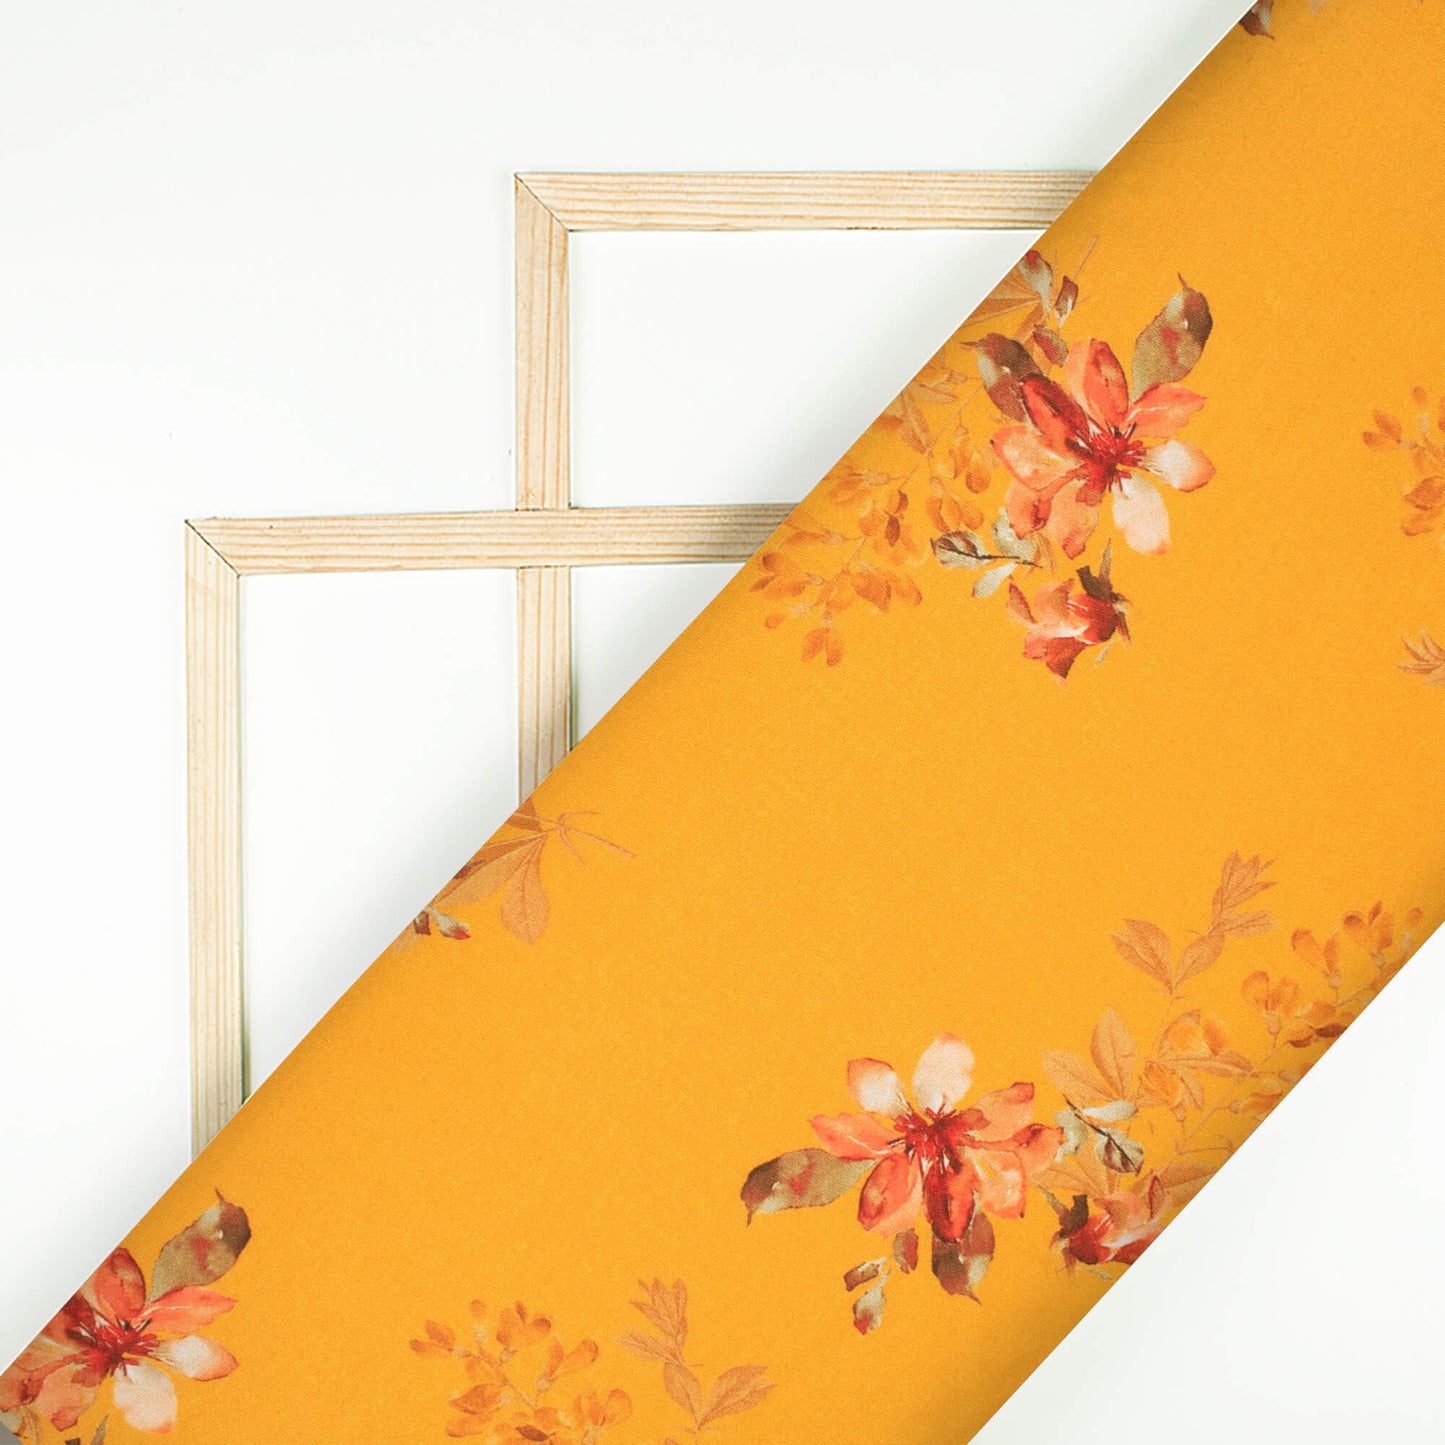 Ochre Yellow And Pink Floral Pattern Digital Print Premium Lush Satin Fabric